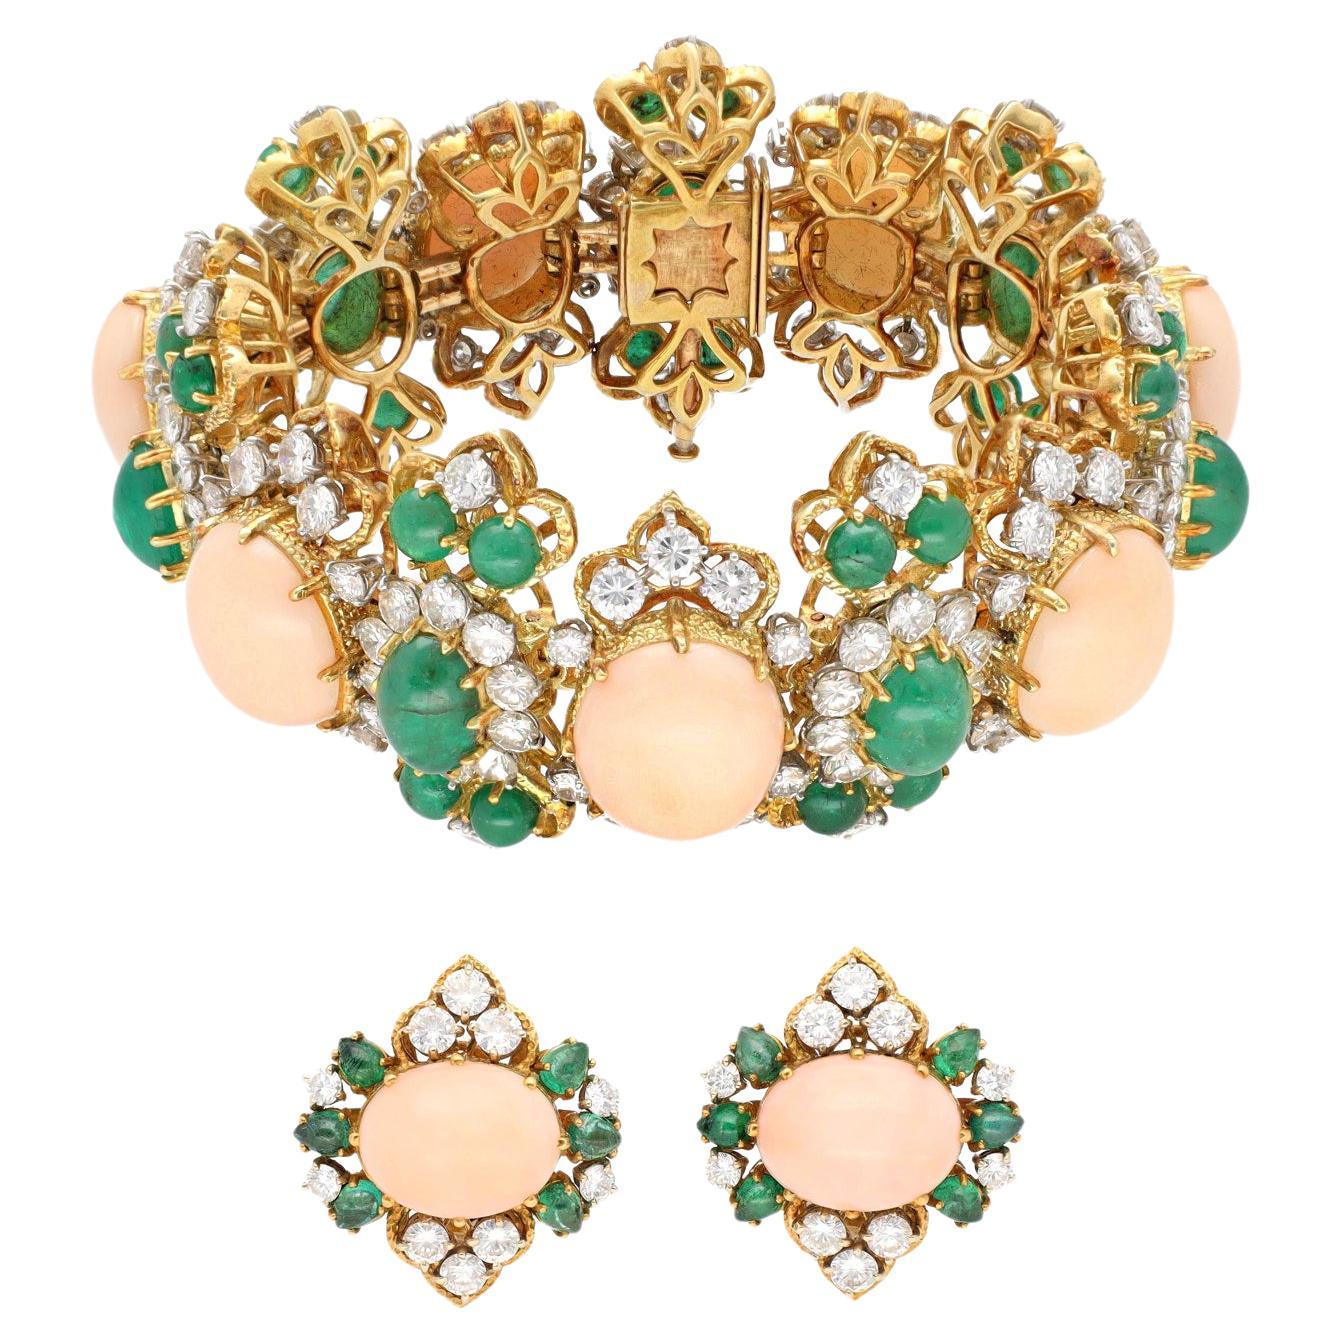 Bulgari Coral and Emerald Diamond Bracelet and Earrings